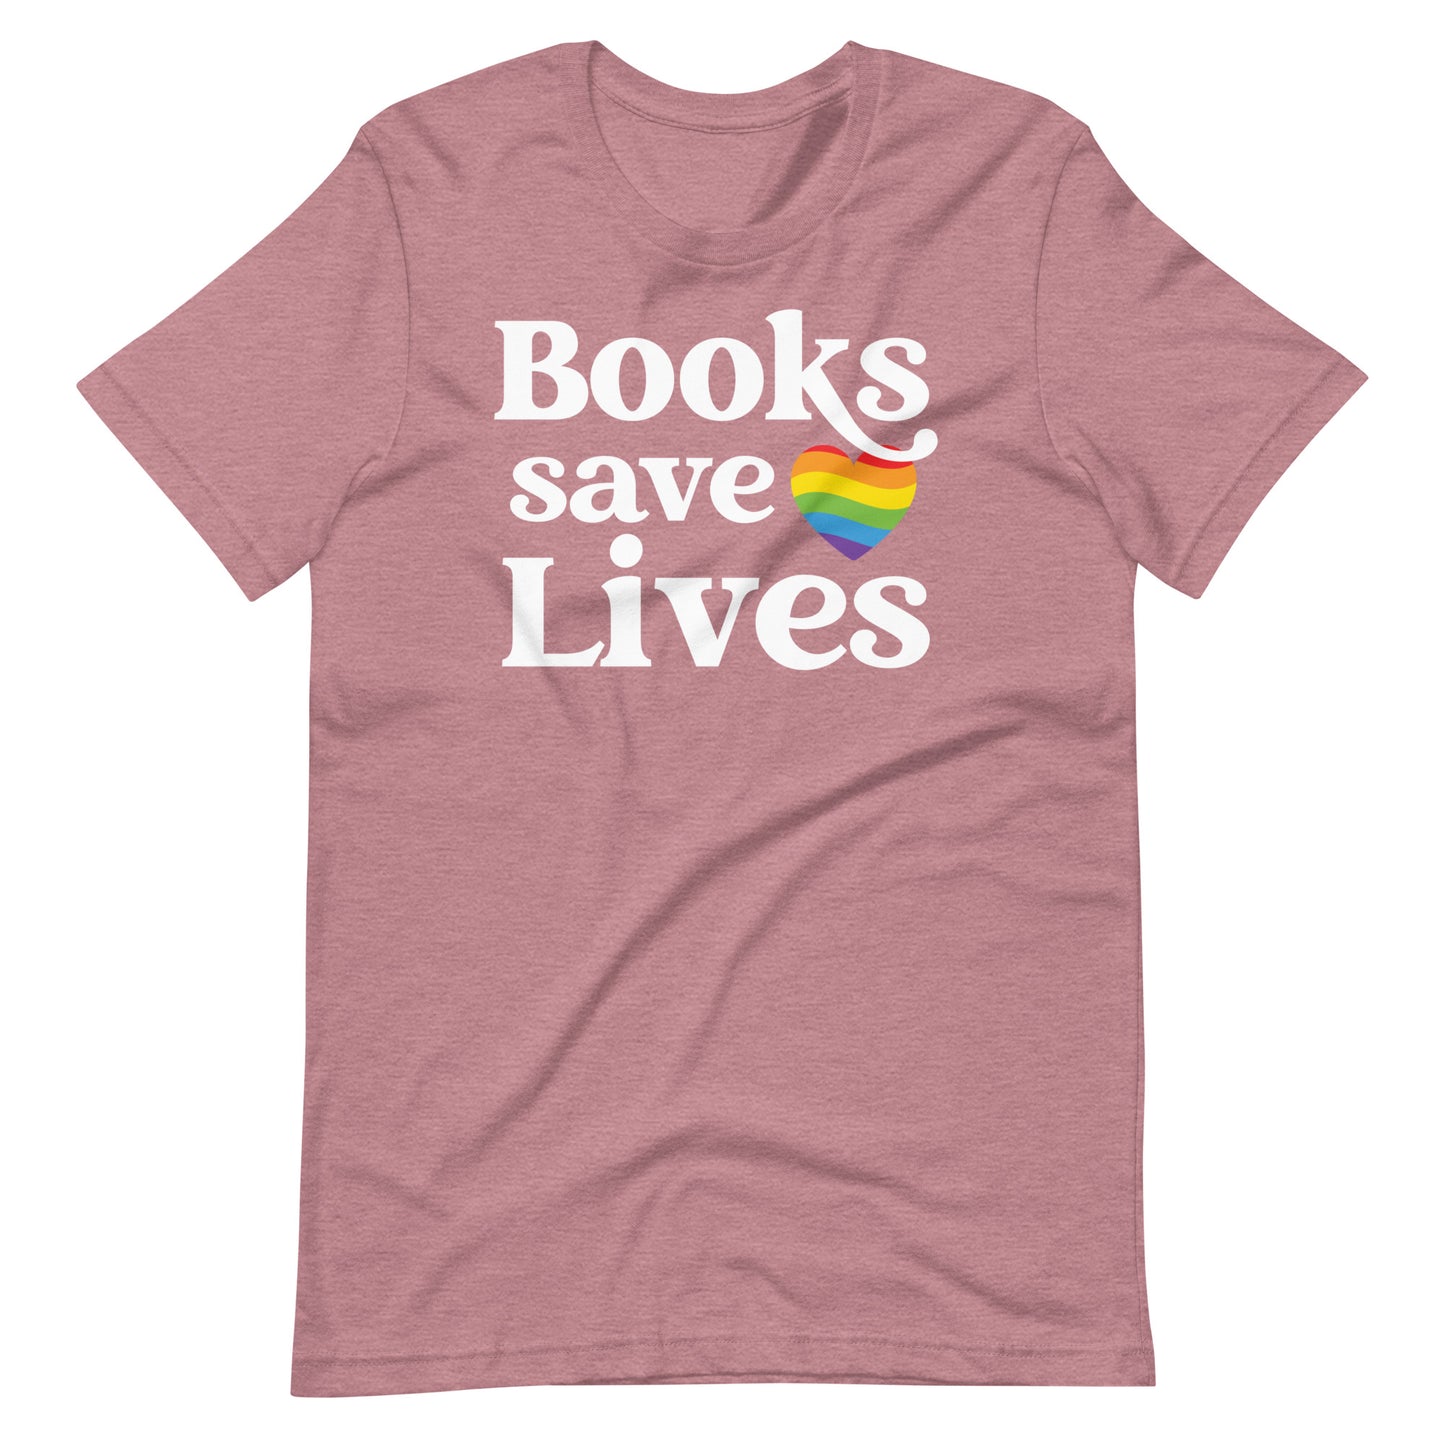 Books Save Lives Short Sleeve T-shirt